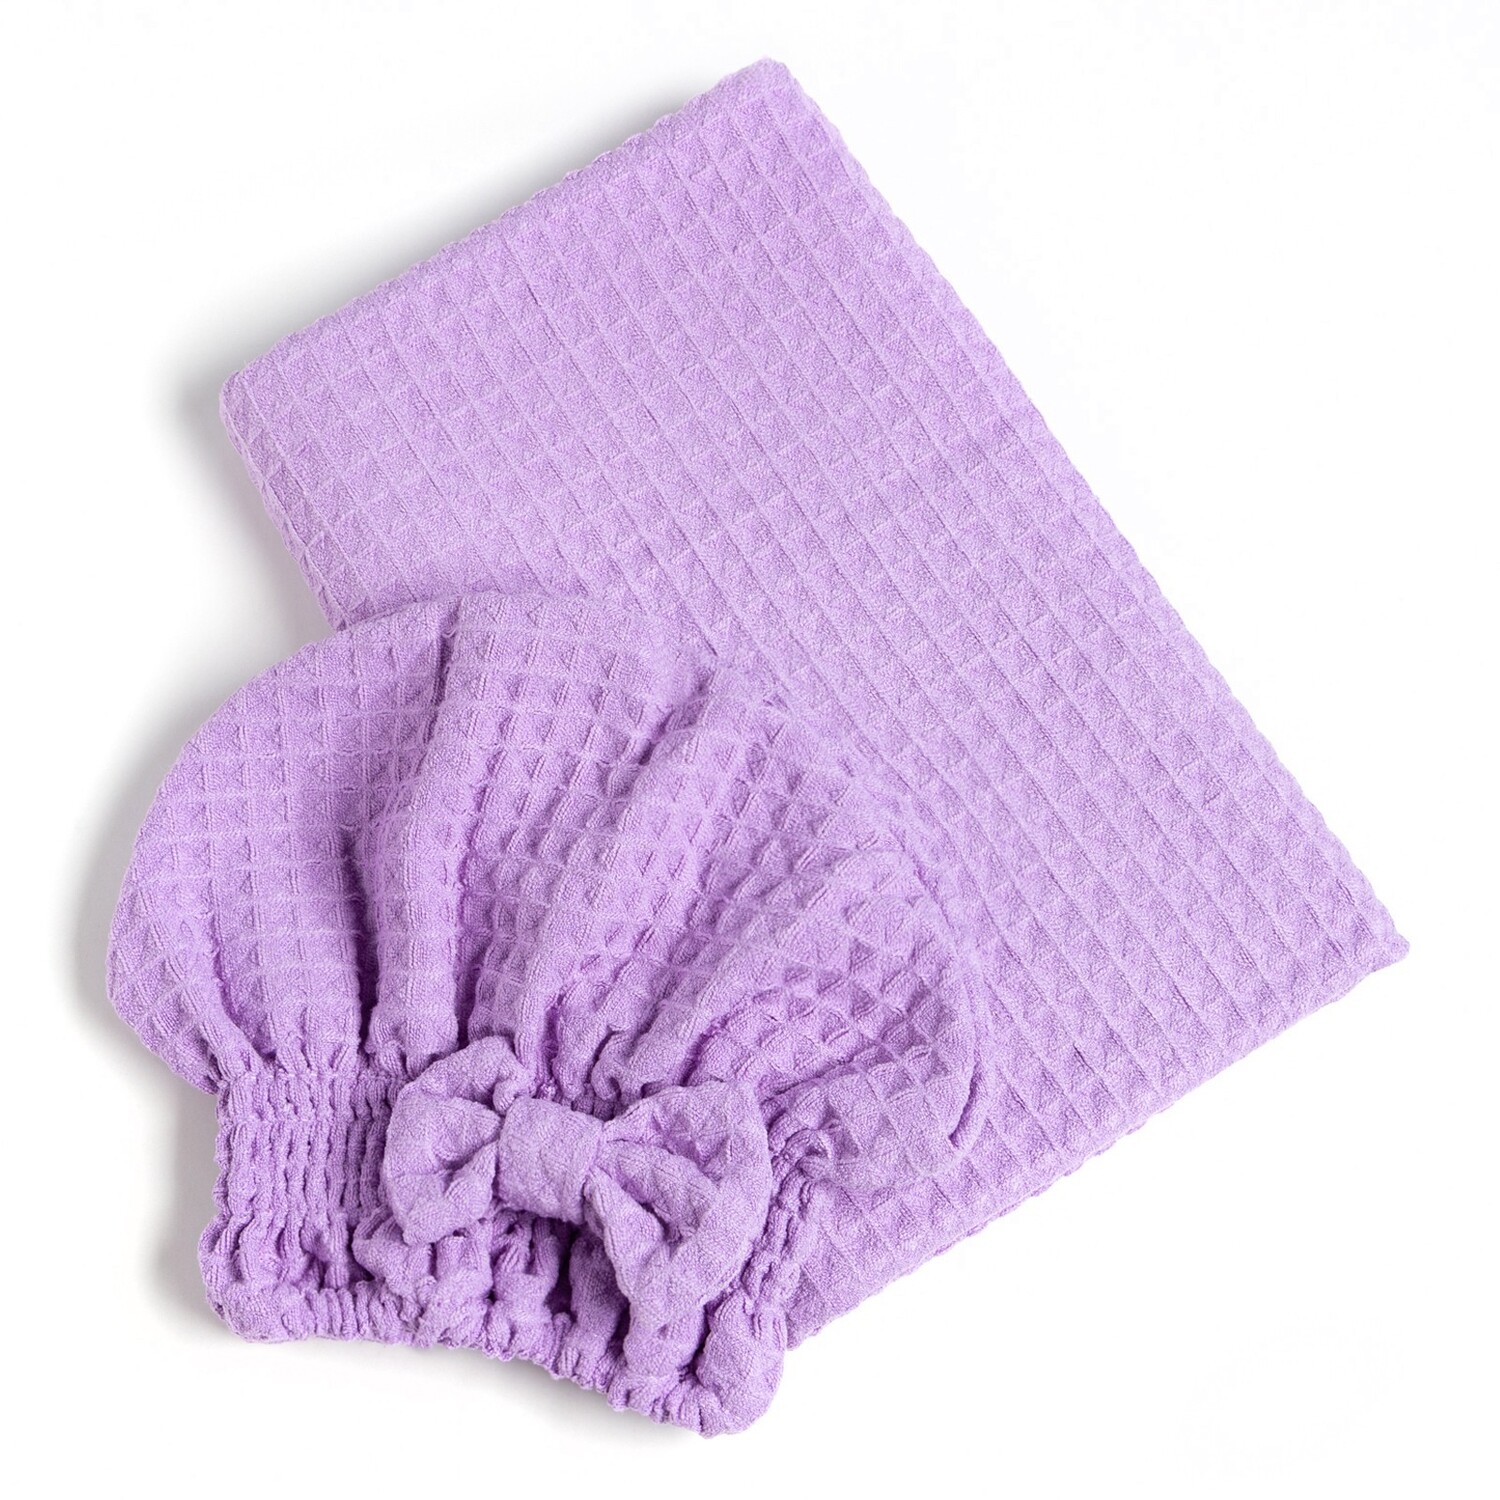 Набор для сауны Вафля цвет: фиолетовый, размер 70х140 см tel837315 - фото 1